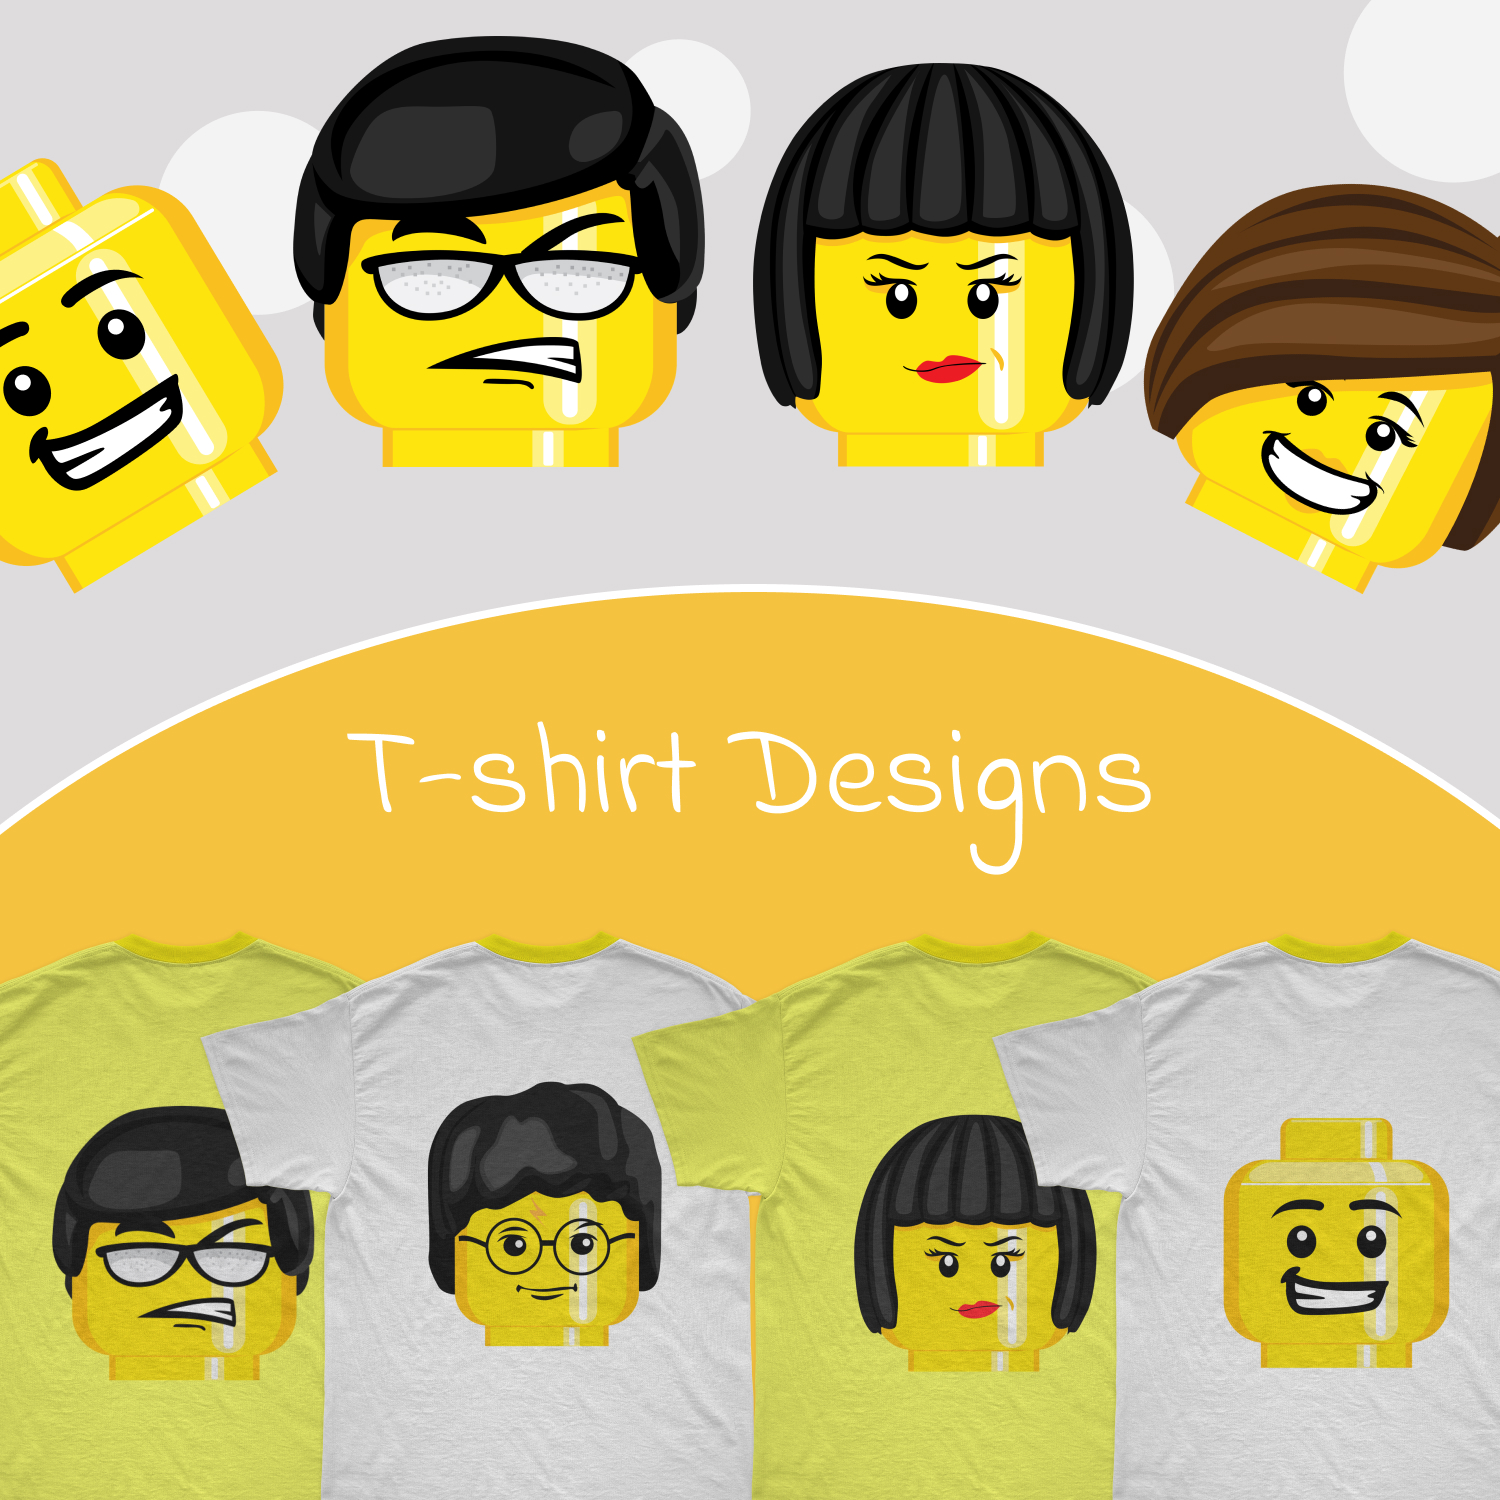 Prints of lego head t shirt designs bundle.